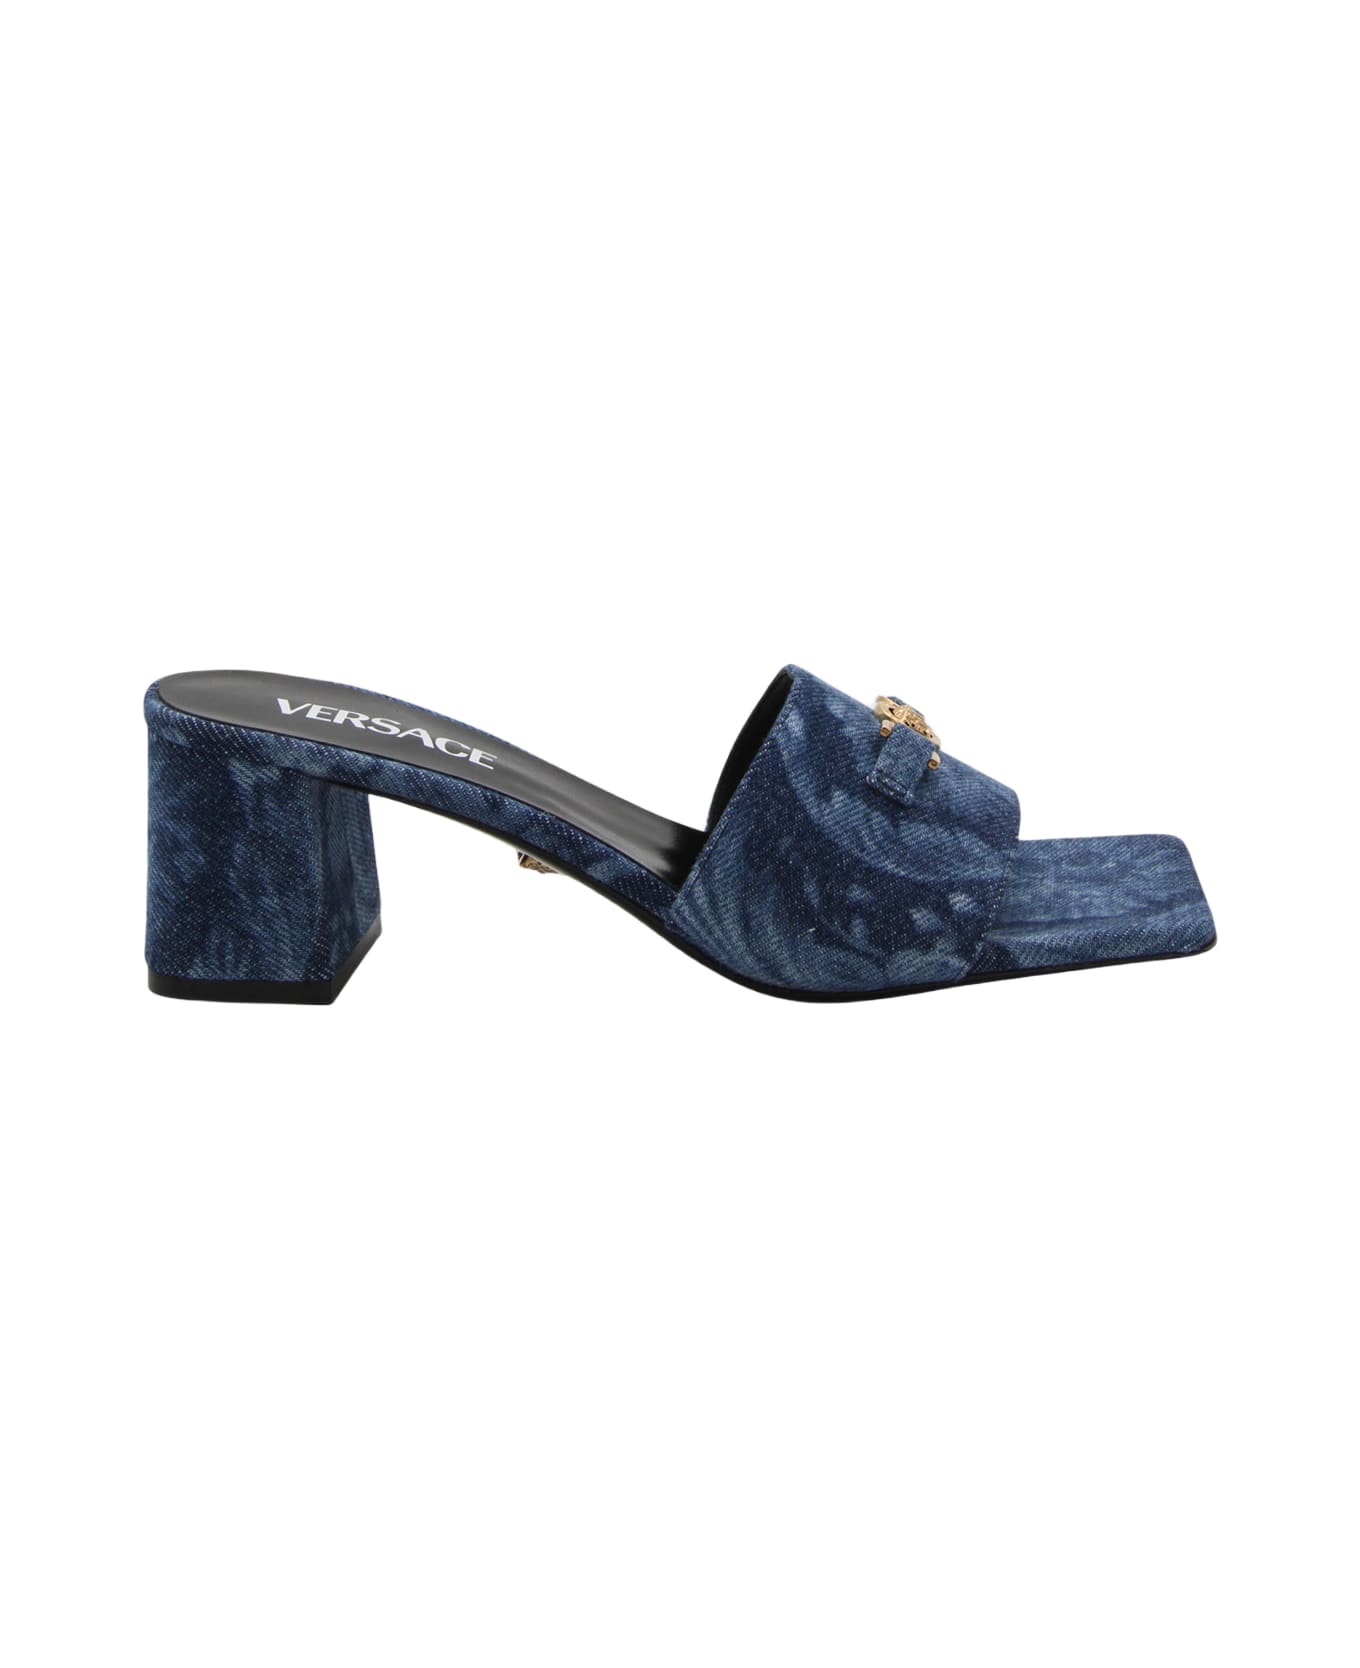 Versace Blue Denim Slippers - Denim